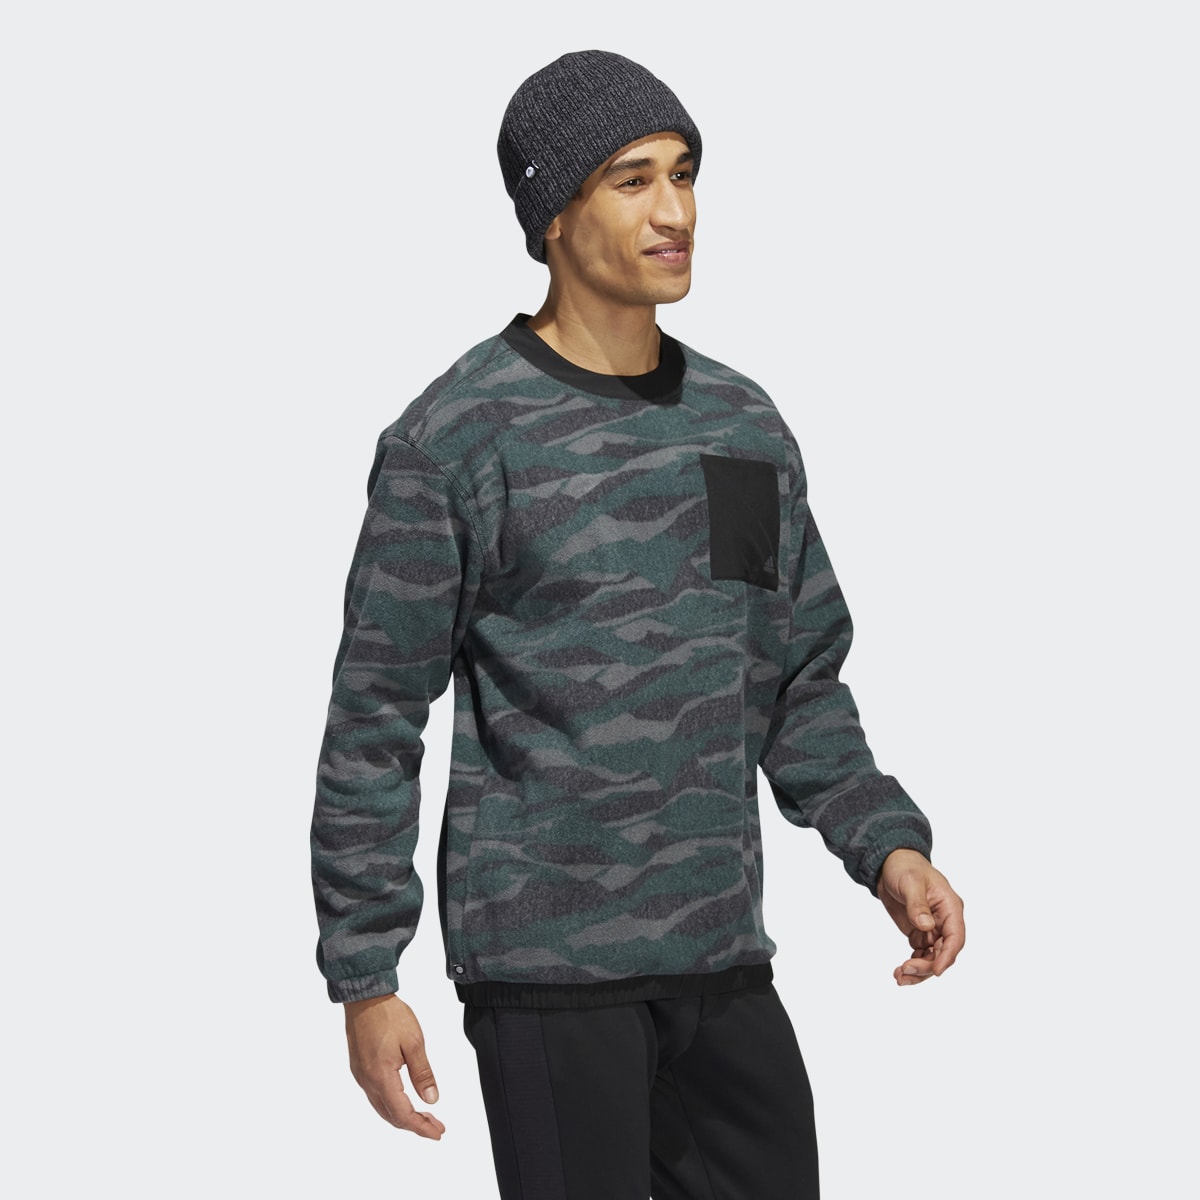 Adidas Texture-Print Crew Sweatshirt. 4